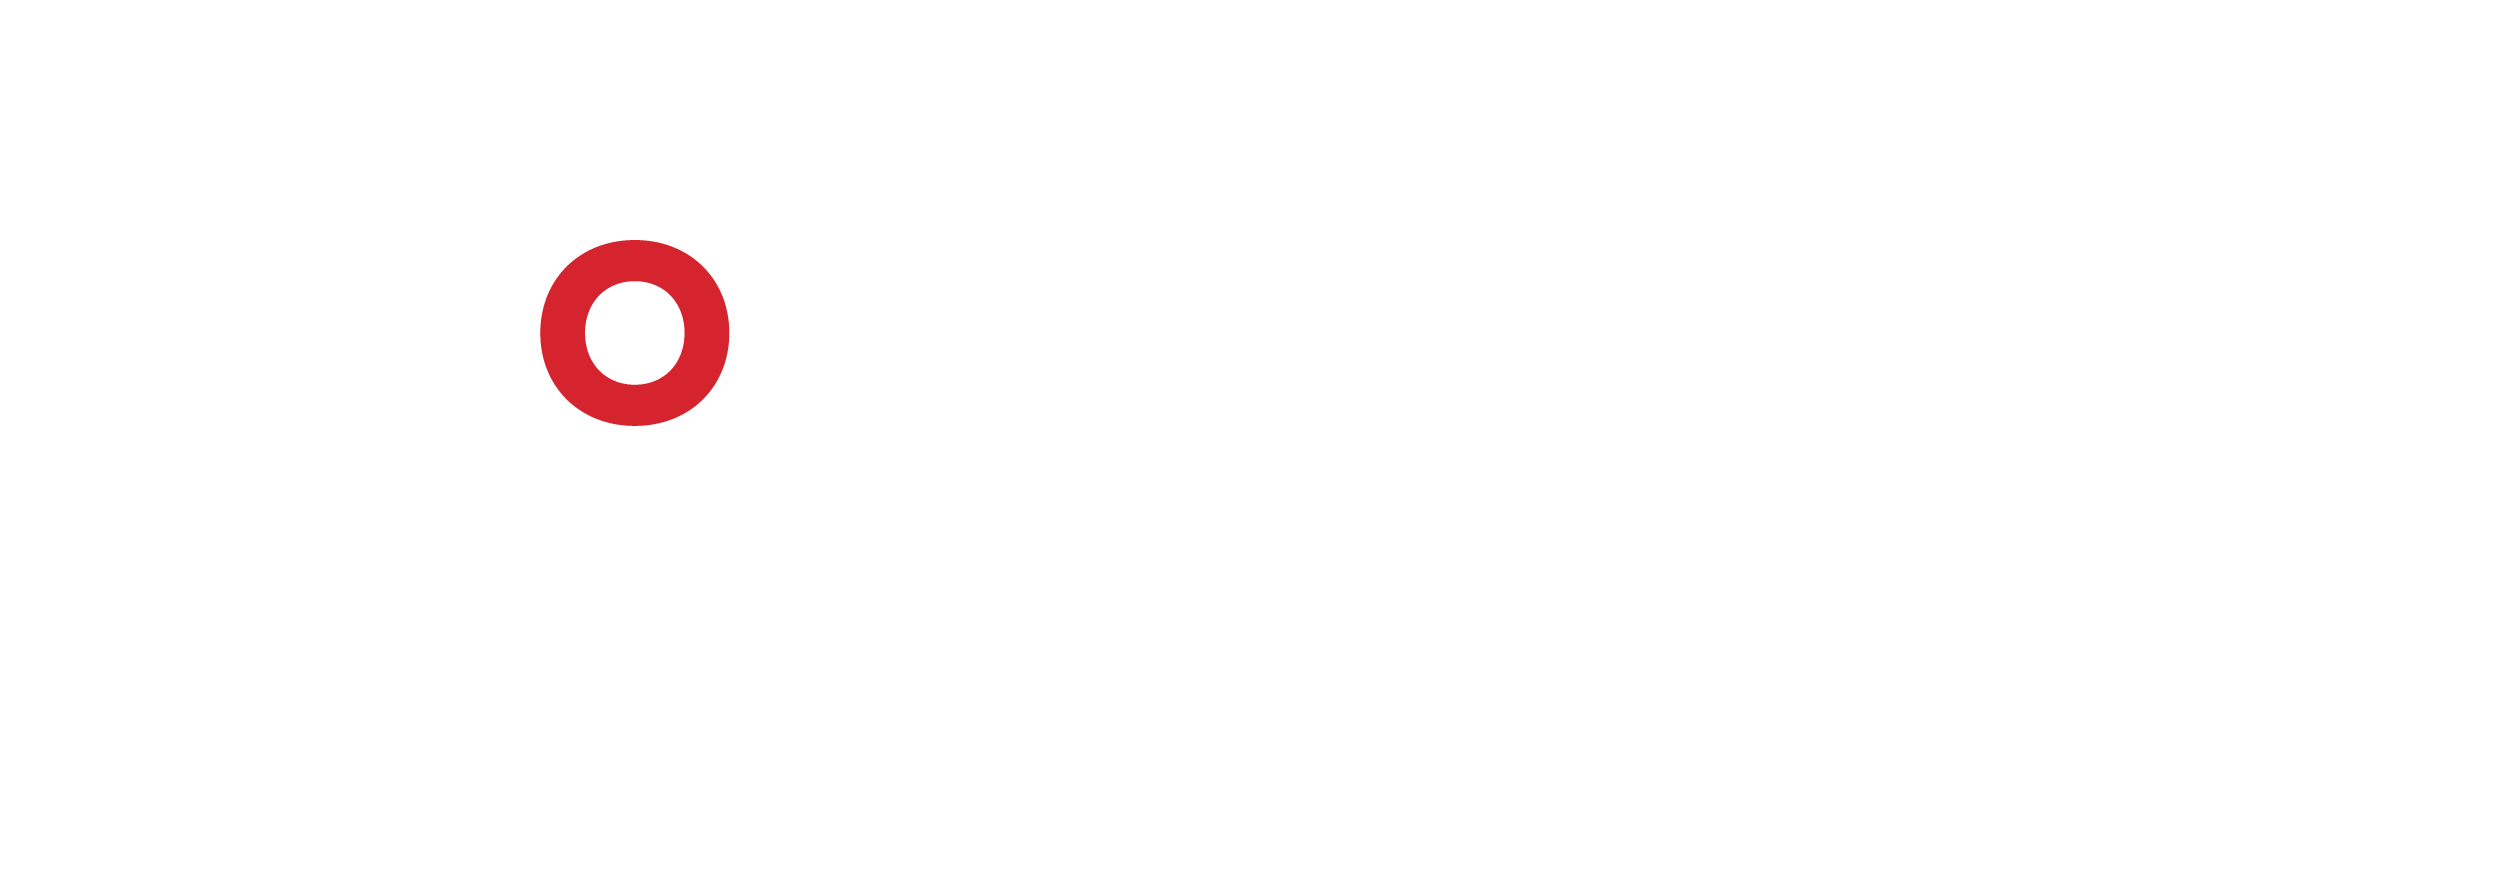 Global Citizen Fellowship Program powered by BeyGOOD.